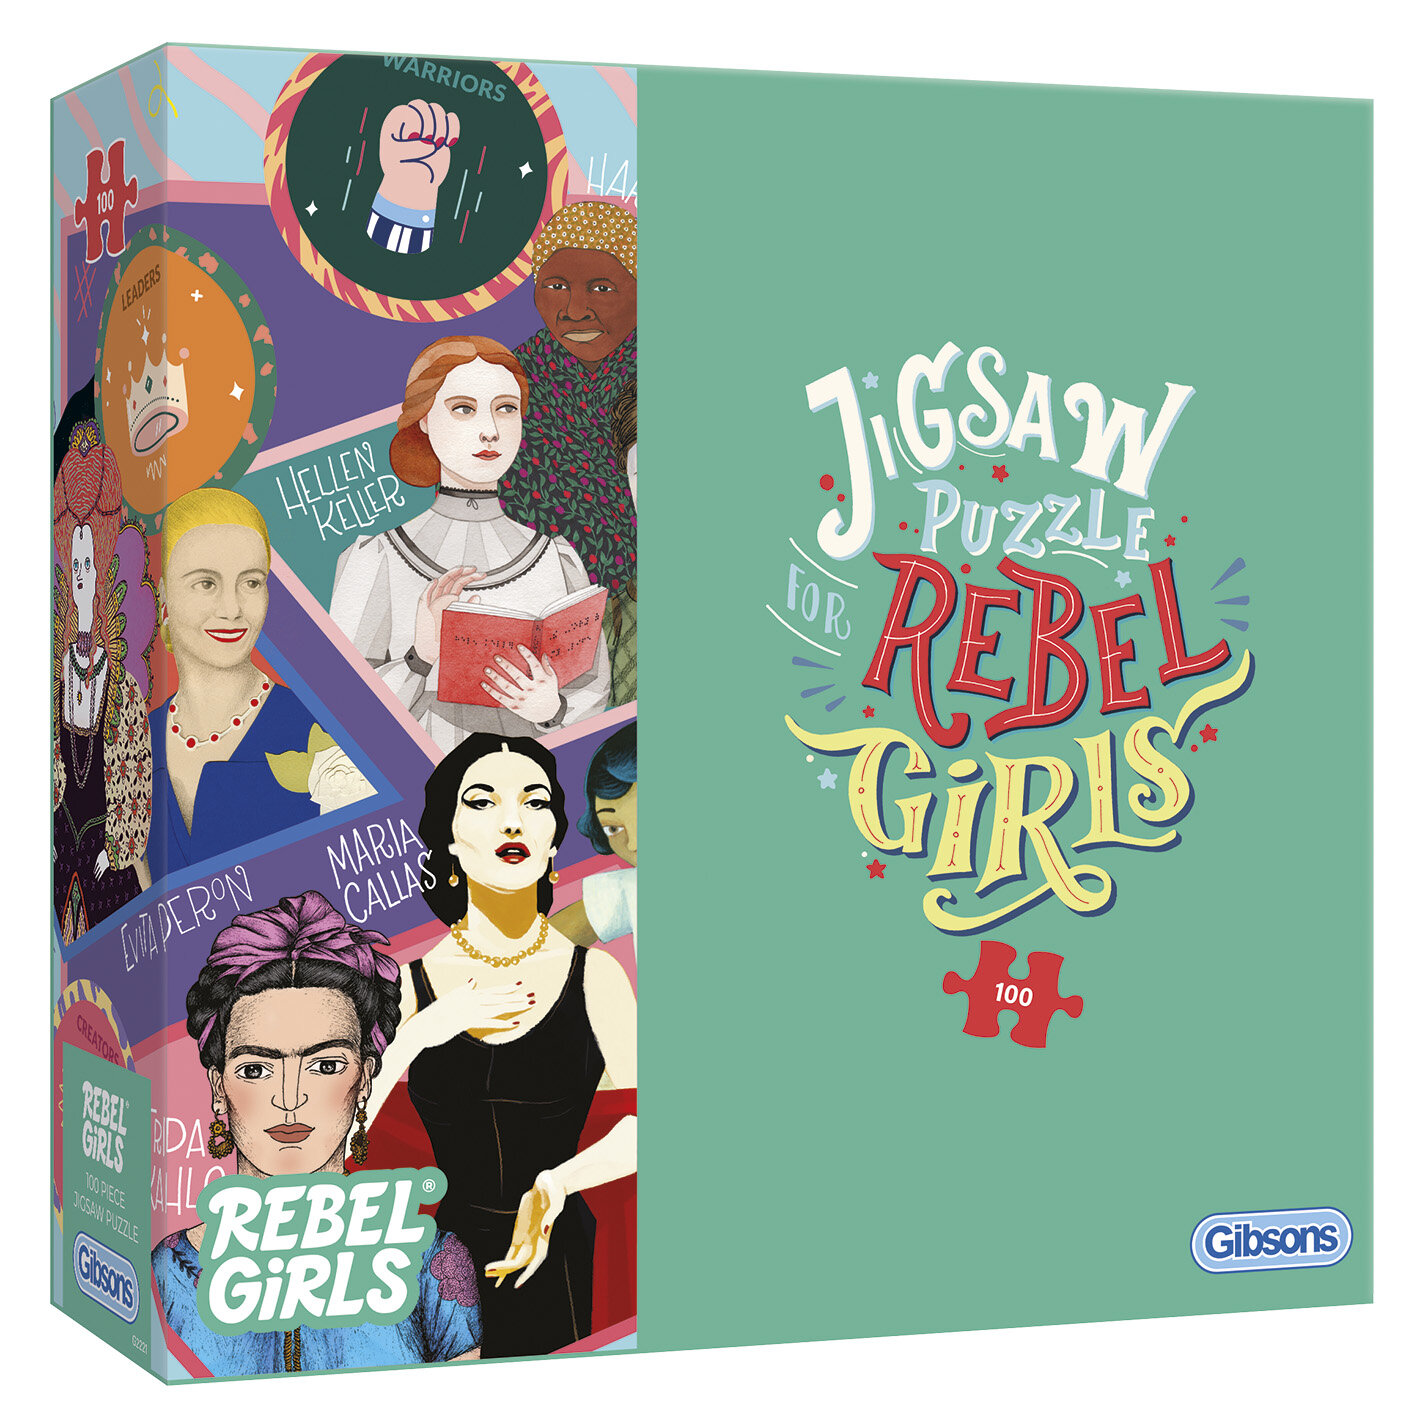 G2221 Rebel Girls 100XXL lid base puz leaflet UK